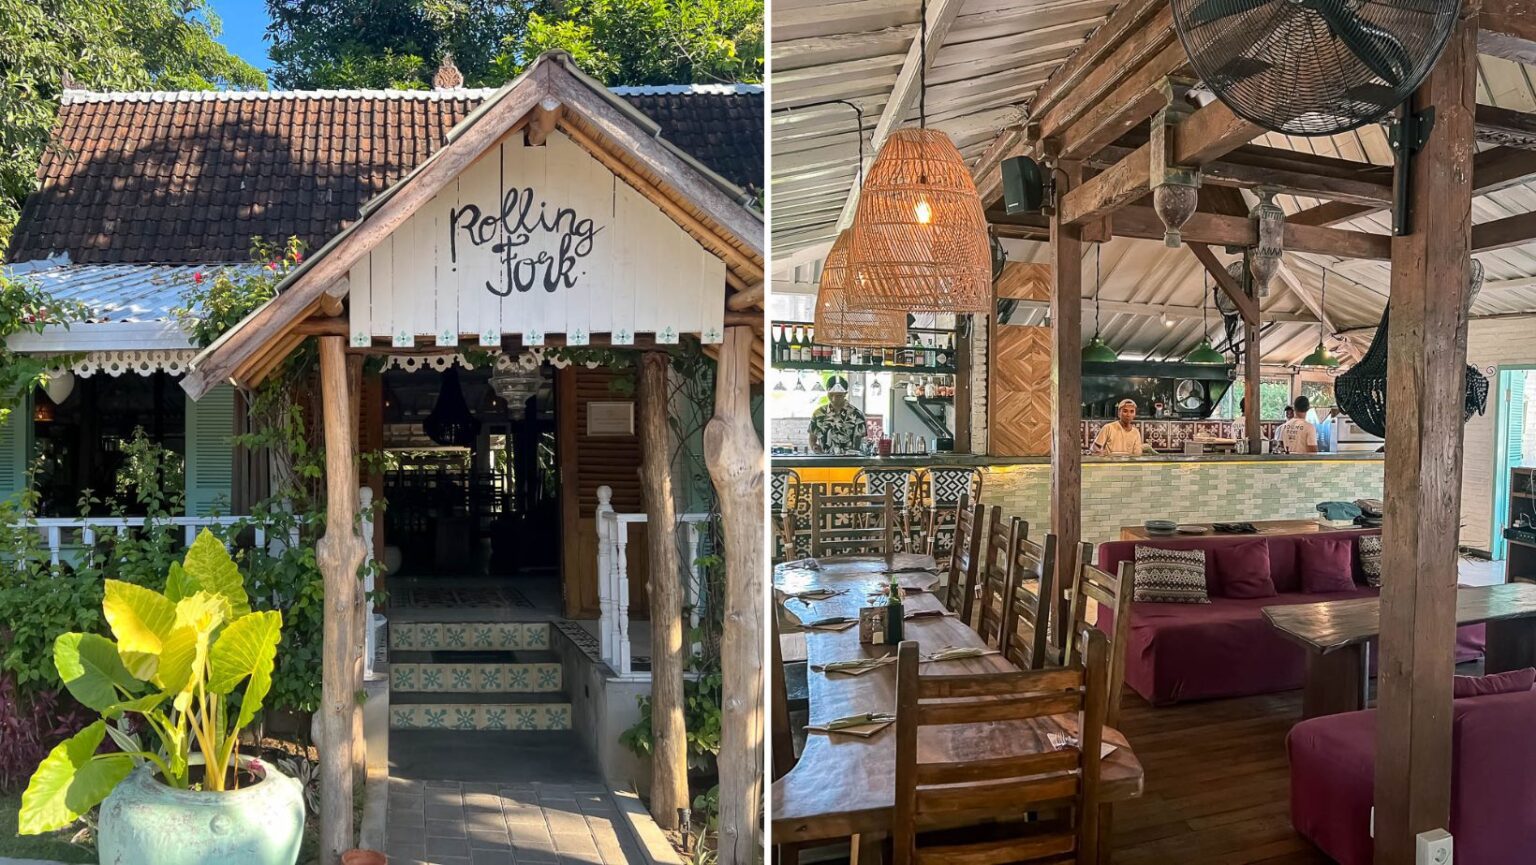 Uluwatu Restaurants Bali - Rolling Fork Exterior and Interior Rustic Feel